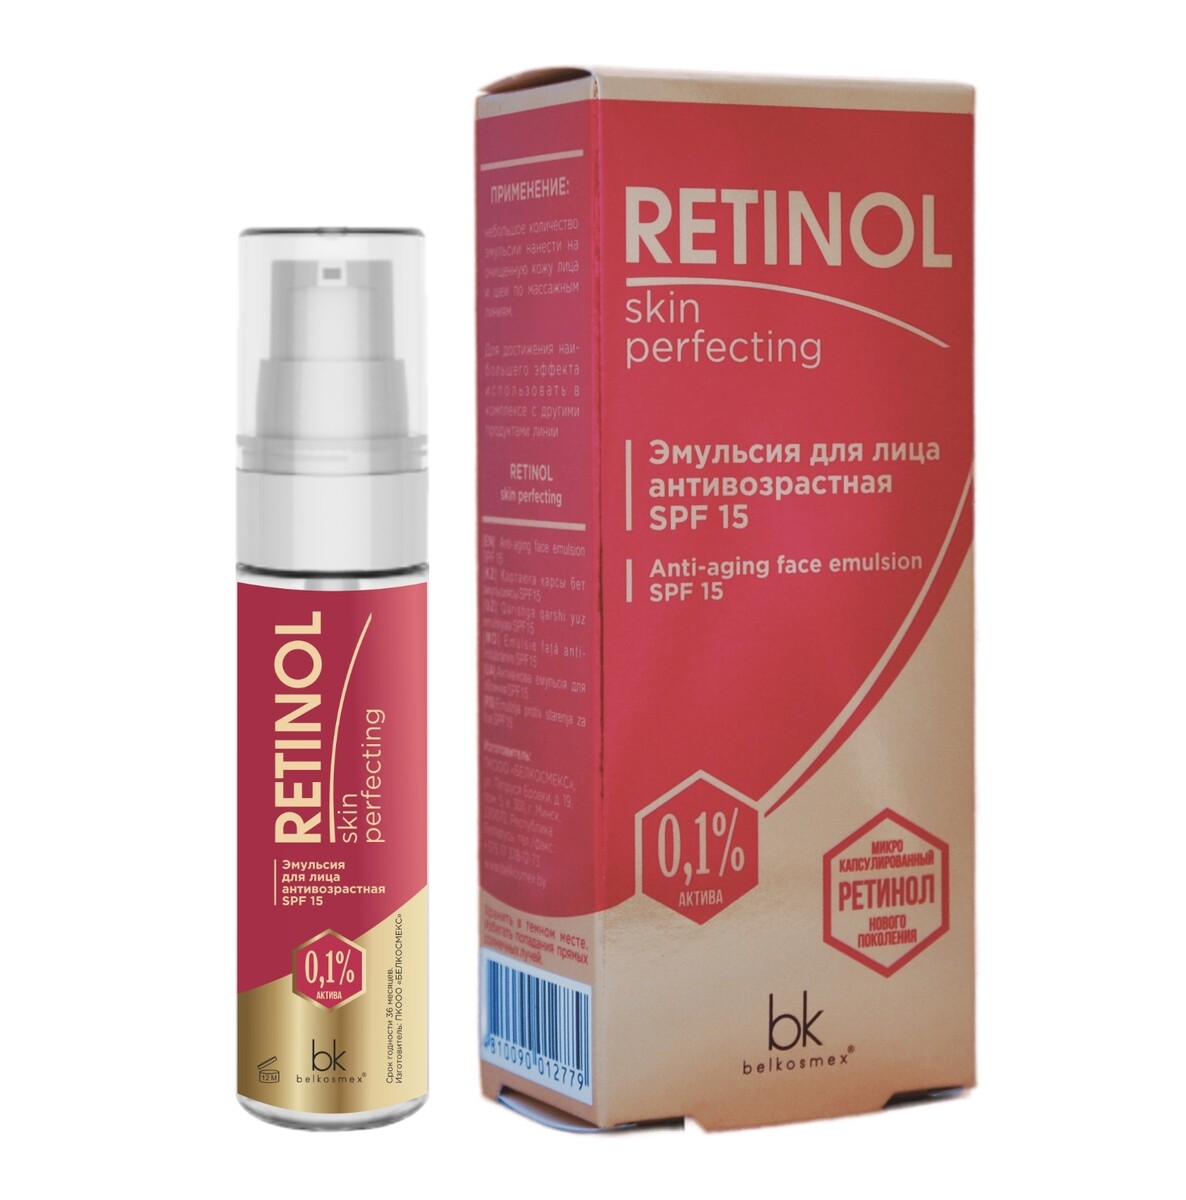 Retinol skin perfecting эмульсия для лица антивозрастная spf 15 30г чехол для хранения велосипеда scicon bike skin tp012000508